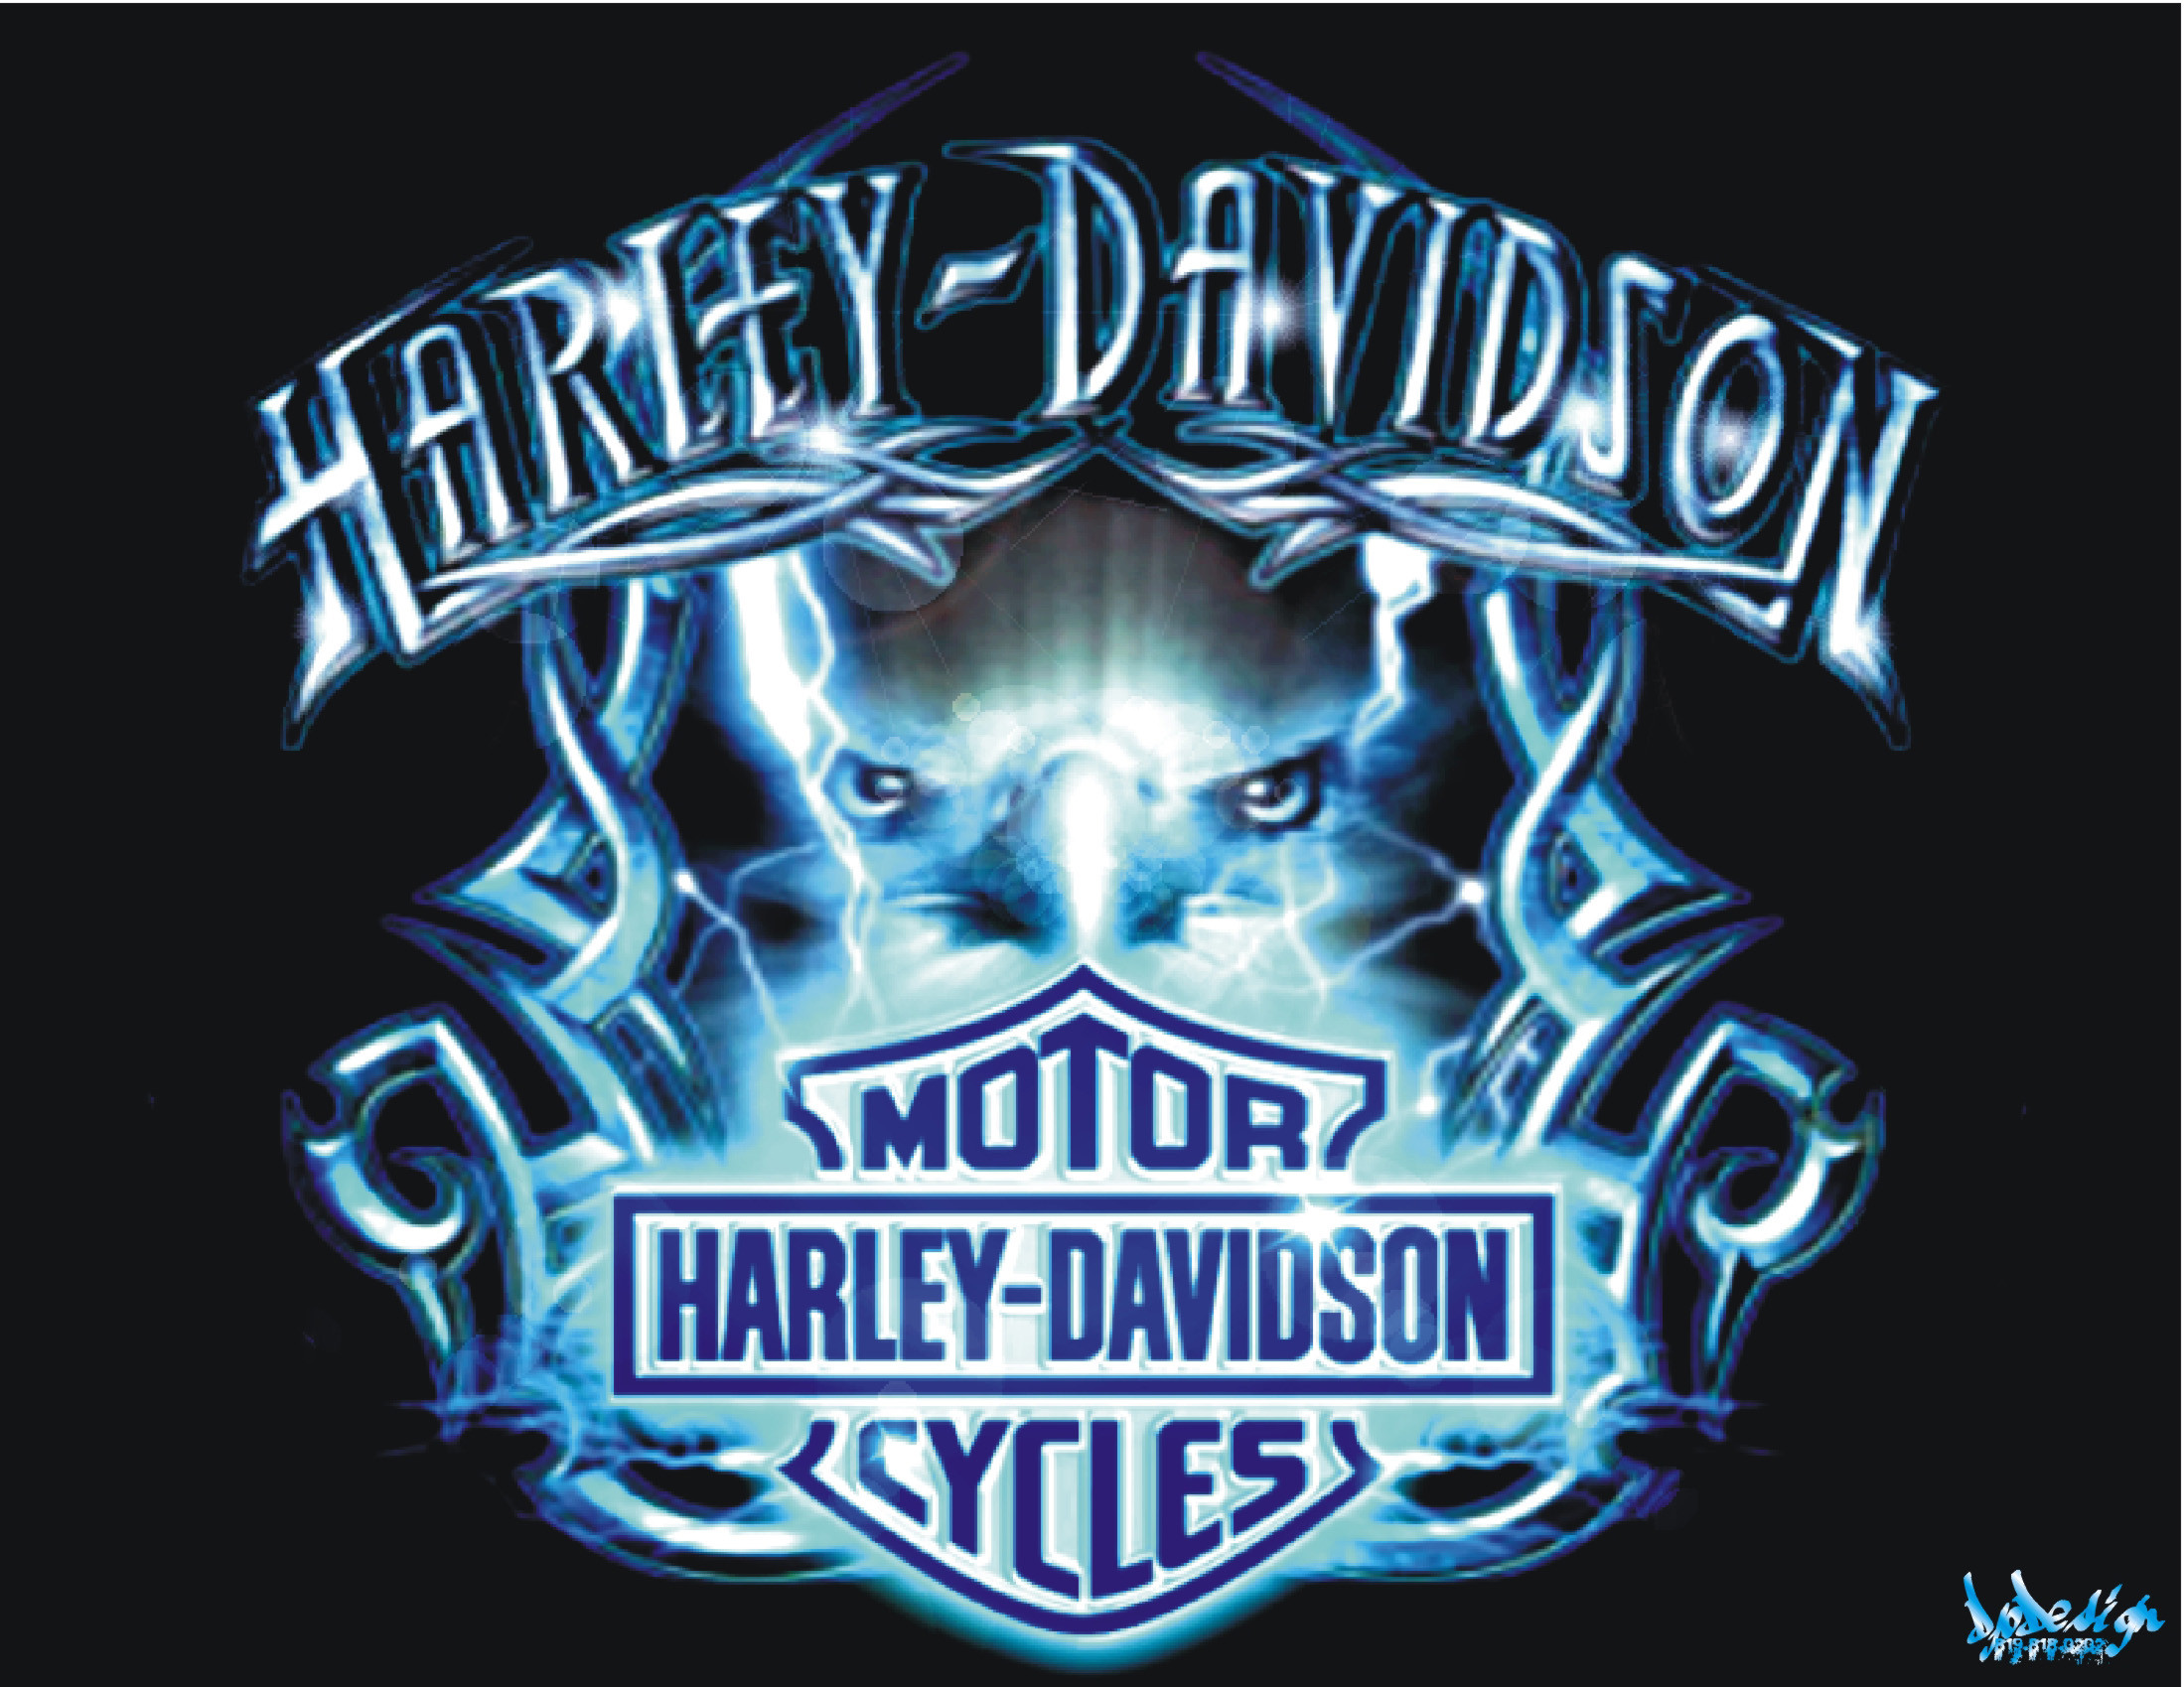 Harley davidson logo background media file jpg